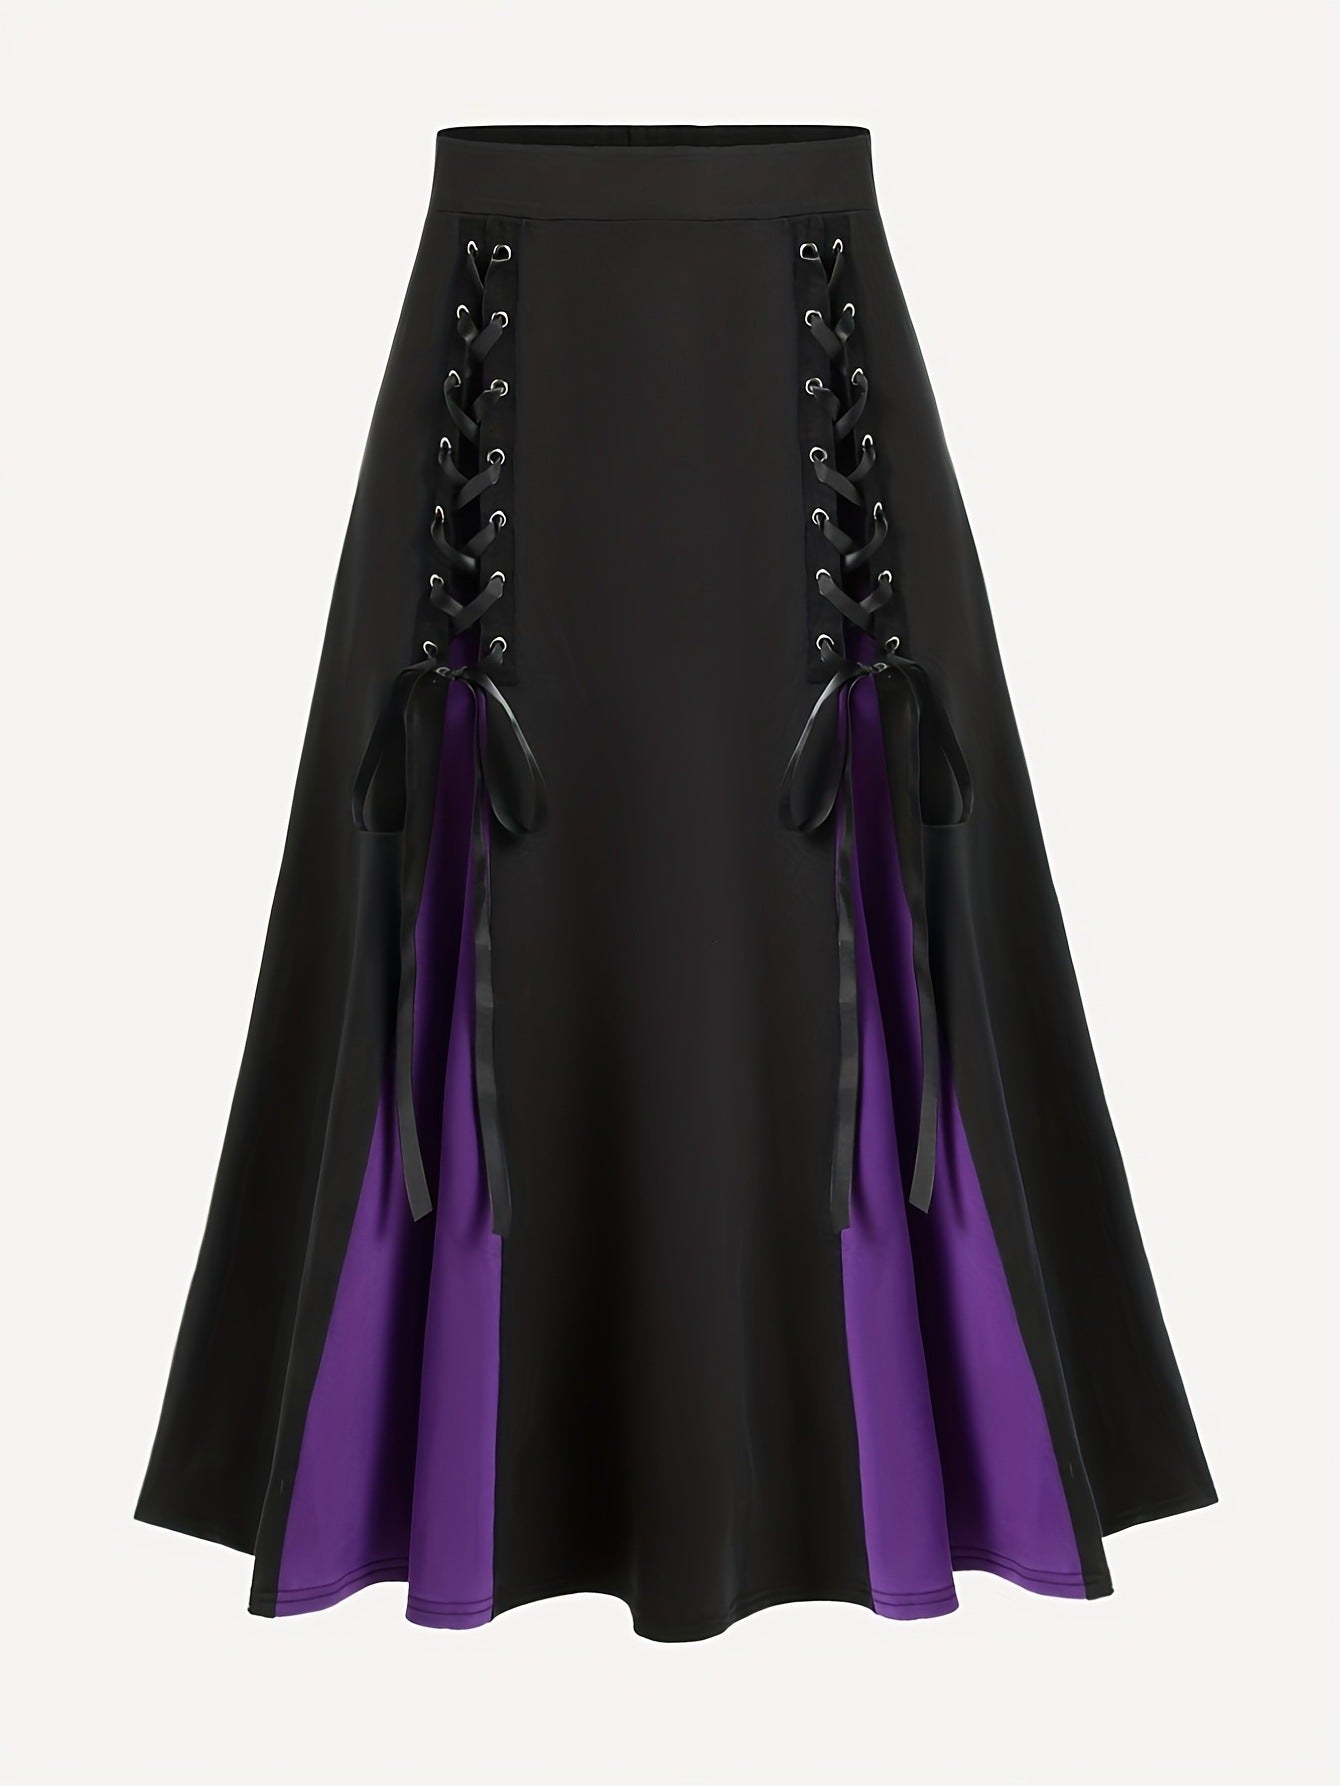 Women's Gothic High Waist Hem Insert Color Elastic Waist Skirt